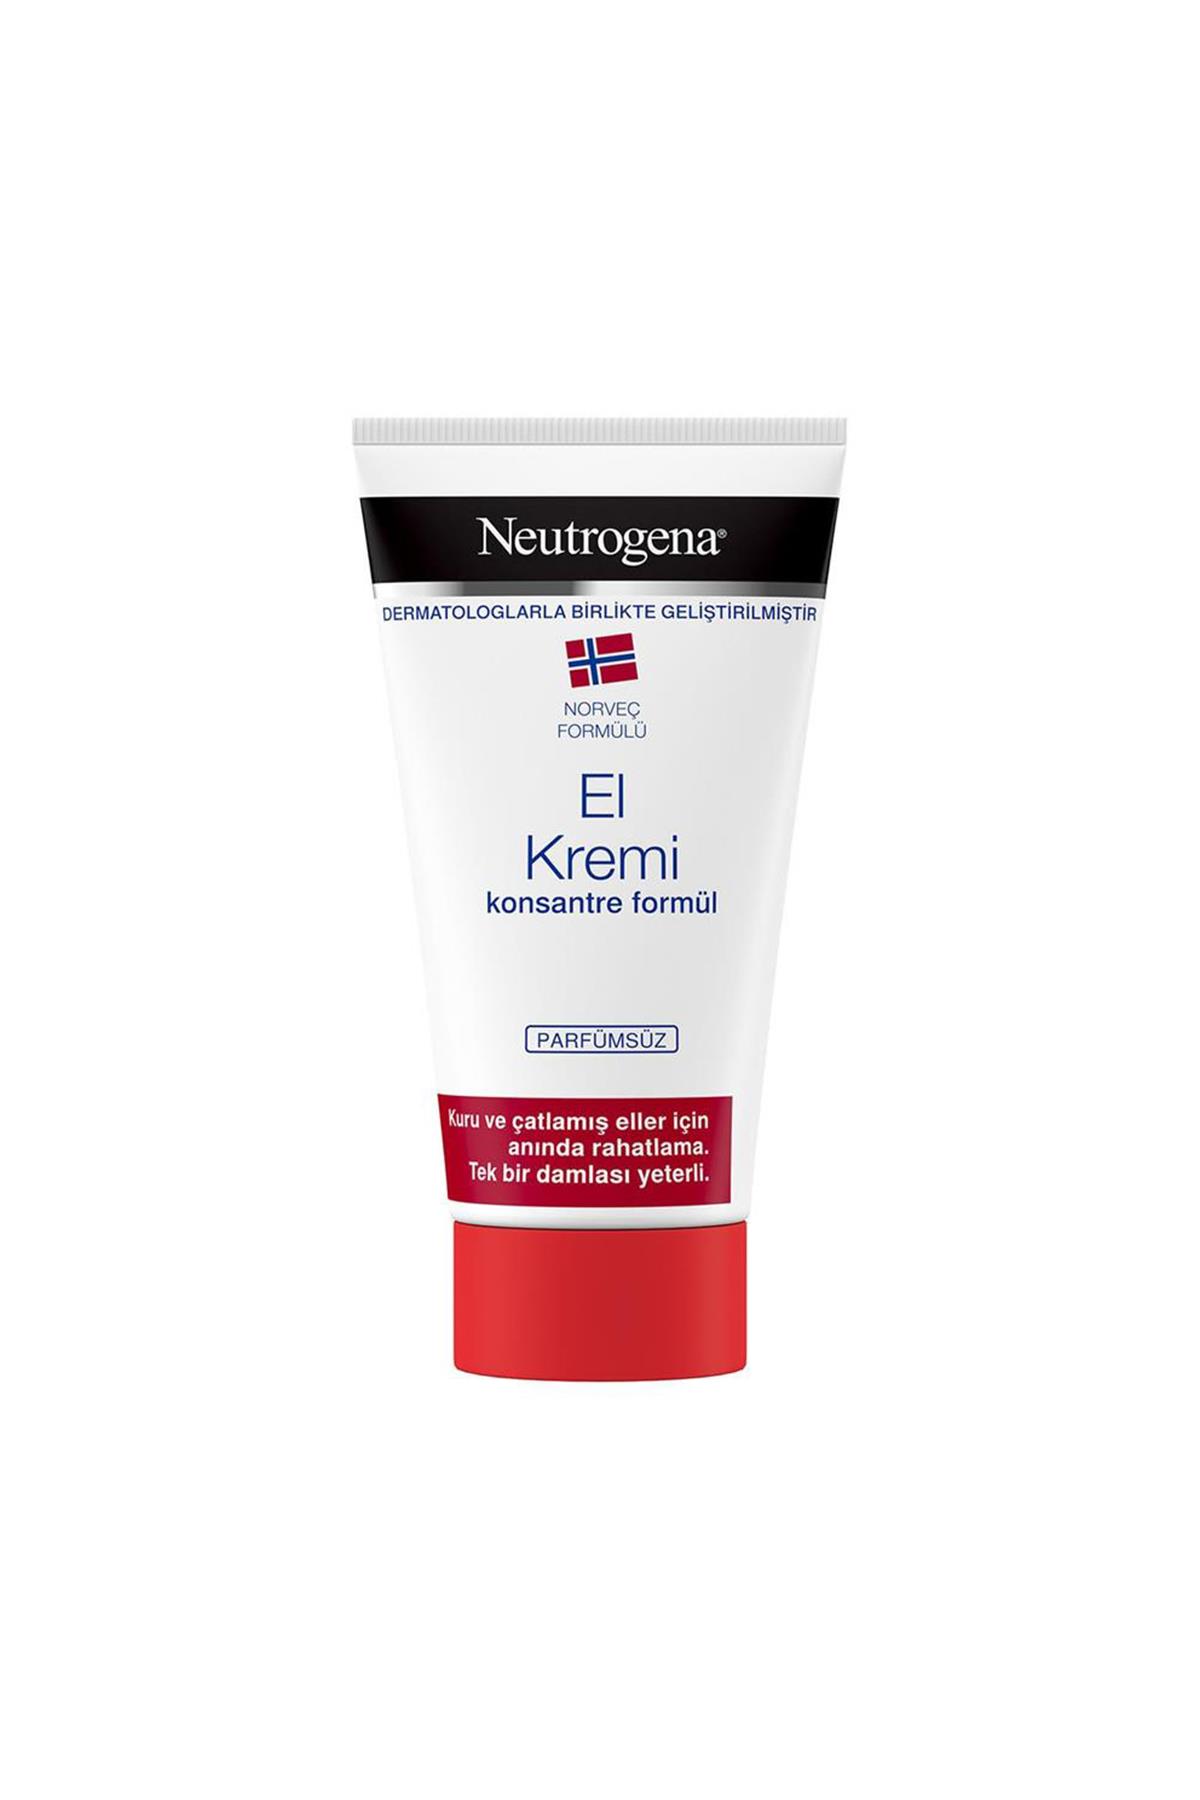 neutrogena-norvec-formulu-el-kremi-parfumsuz-75-ml-5375-1.jpg